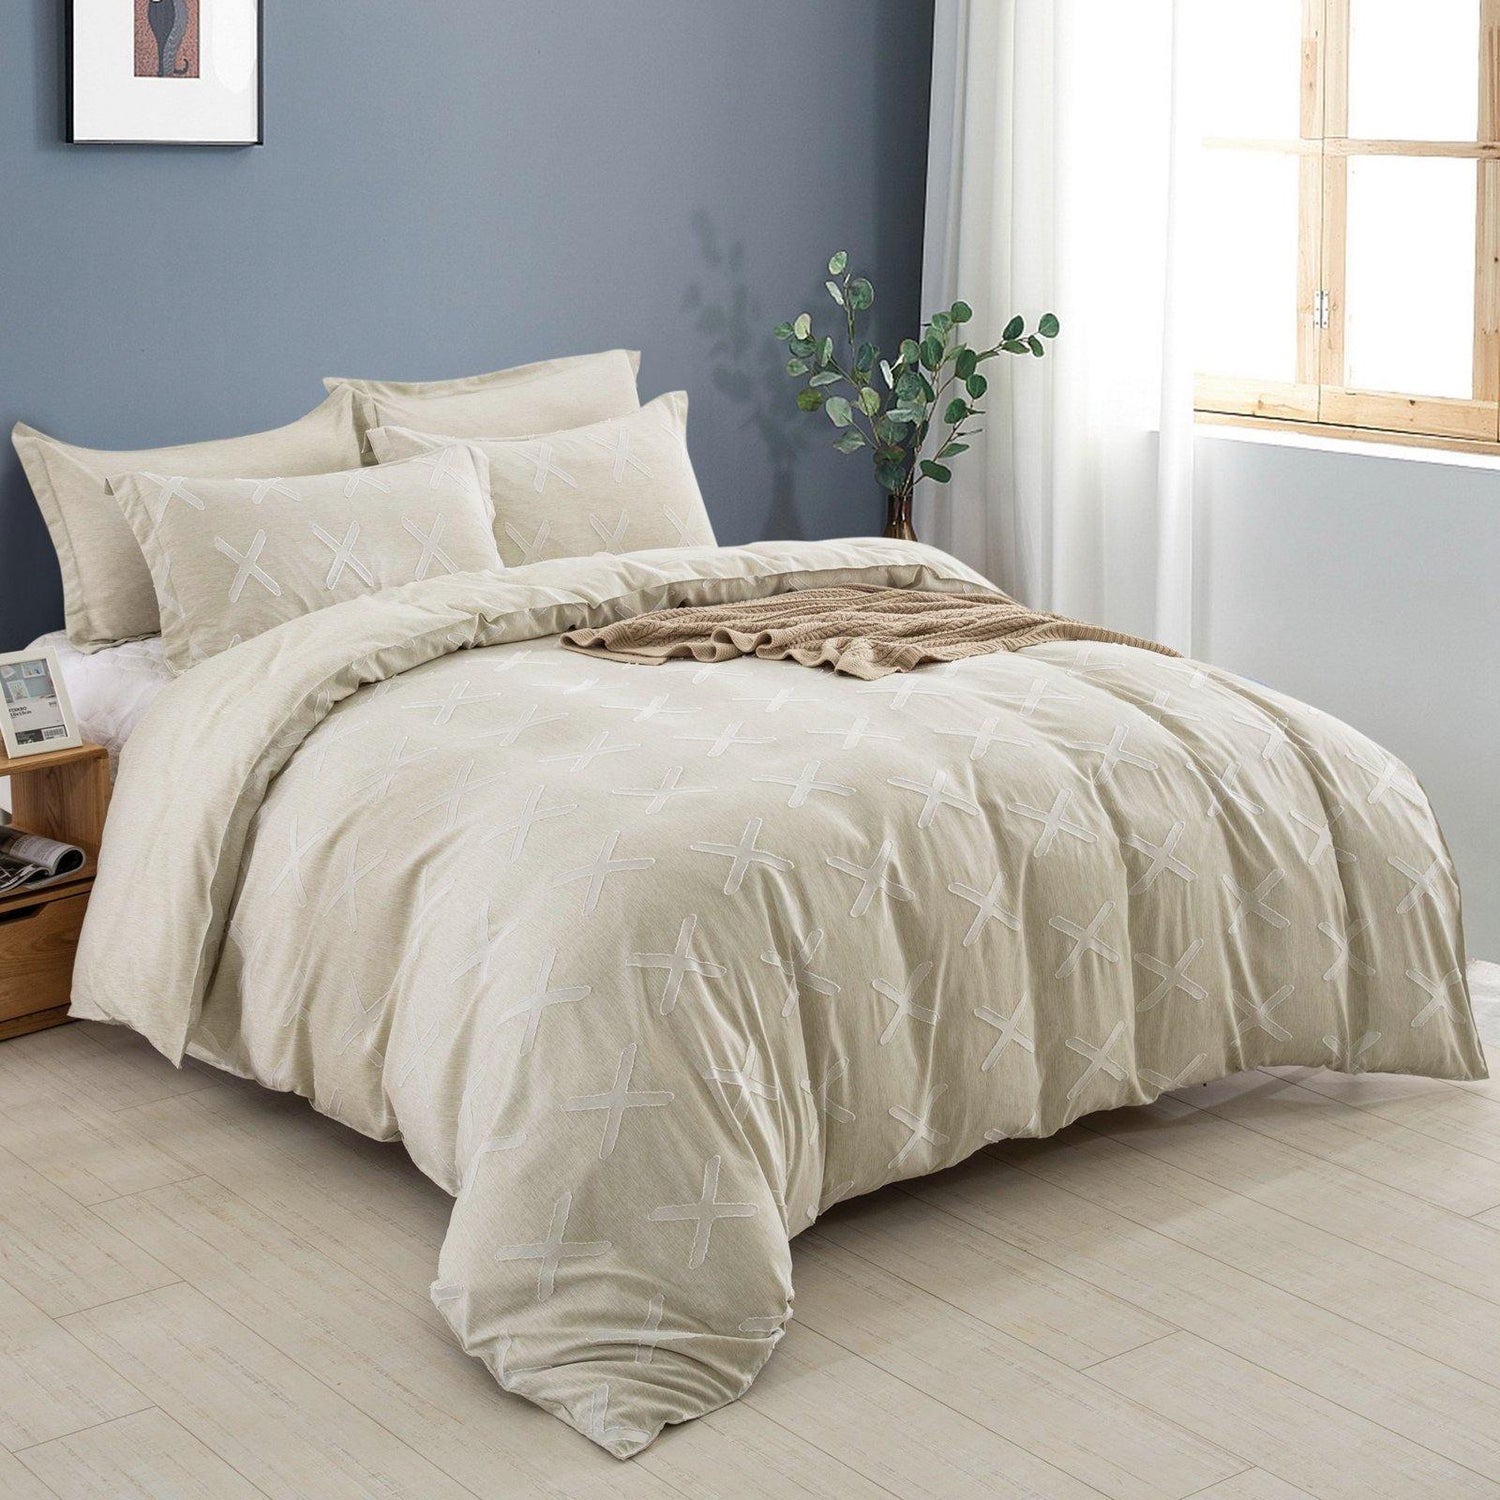 WONGS BEDDING Cream Color Duvet Cover Set - Wongs bedding